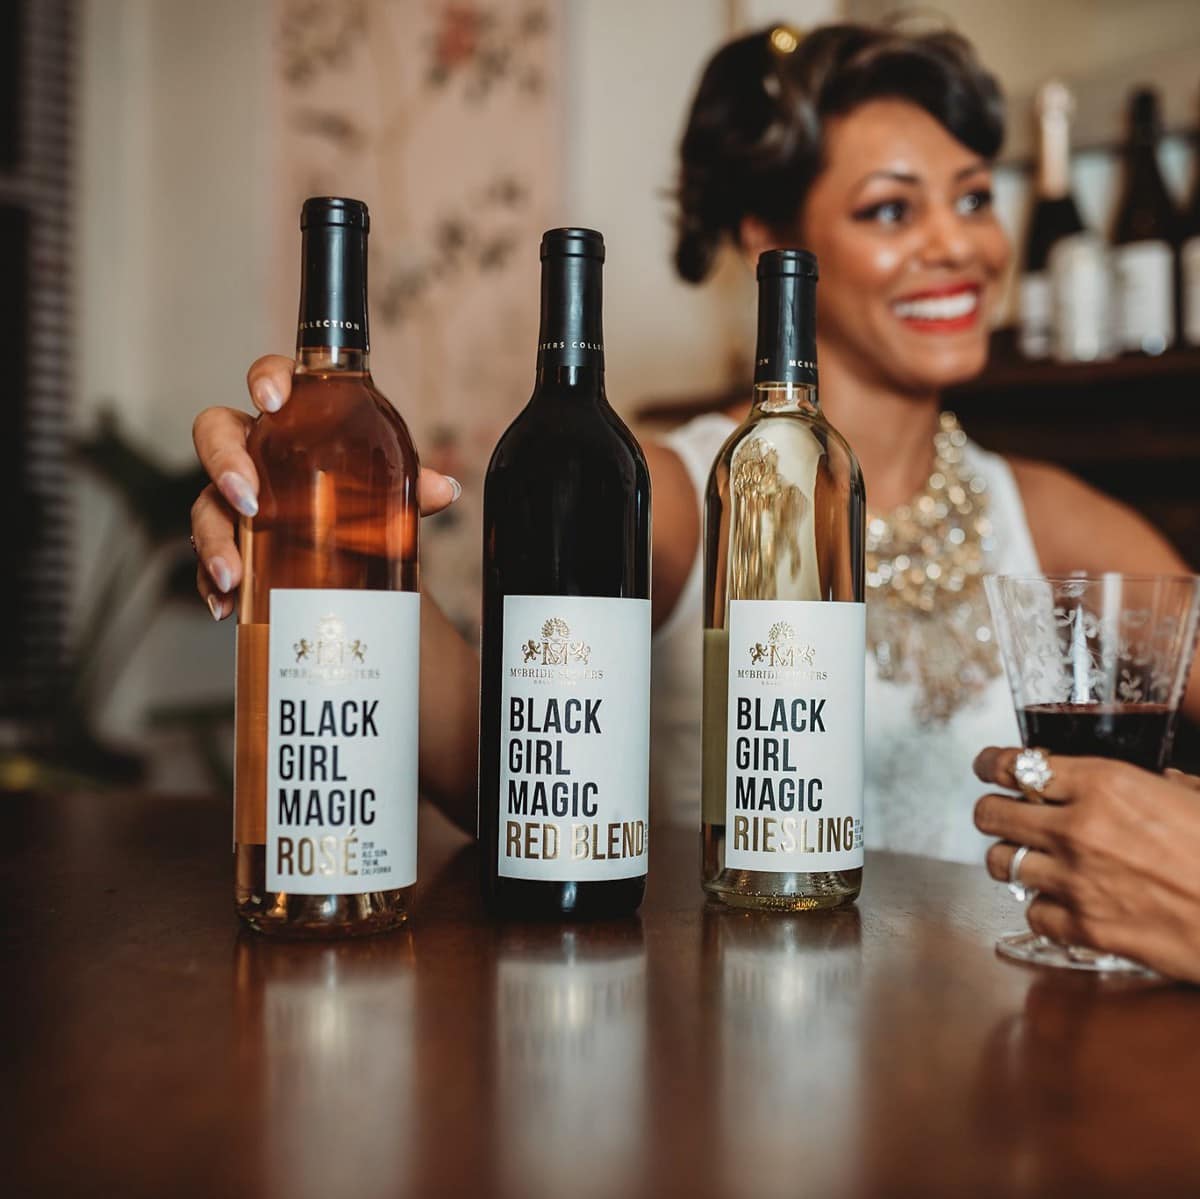 Woman smiling behind three bottles of Black Girl Magic wine